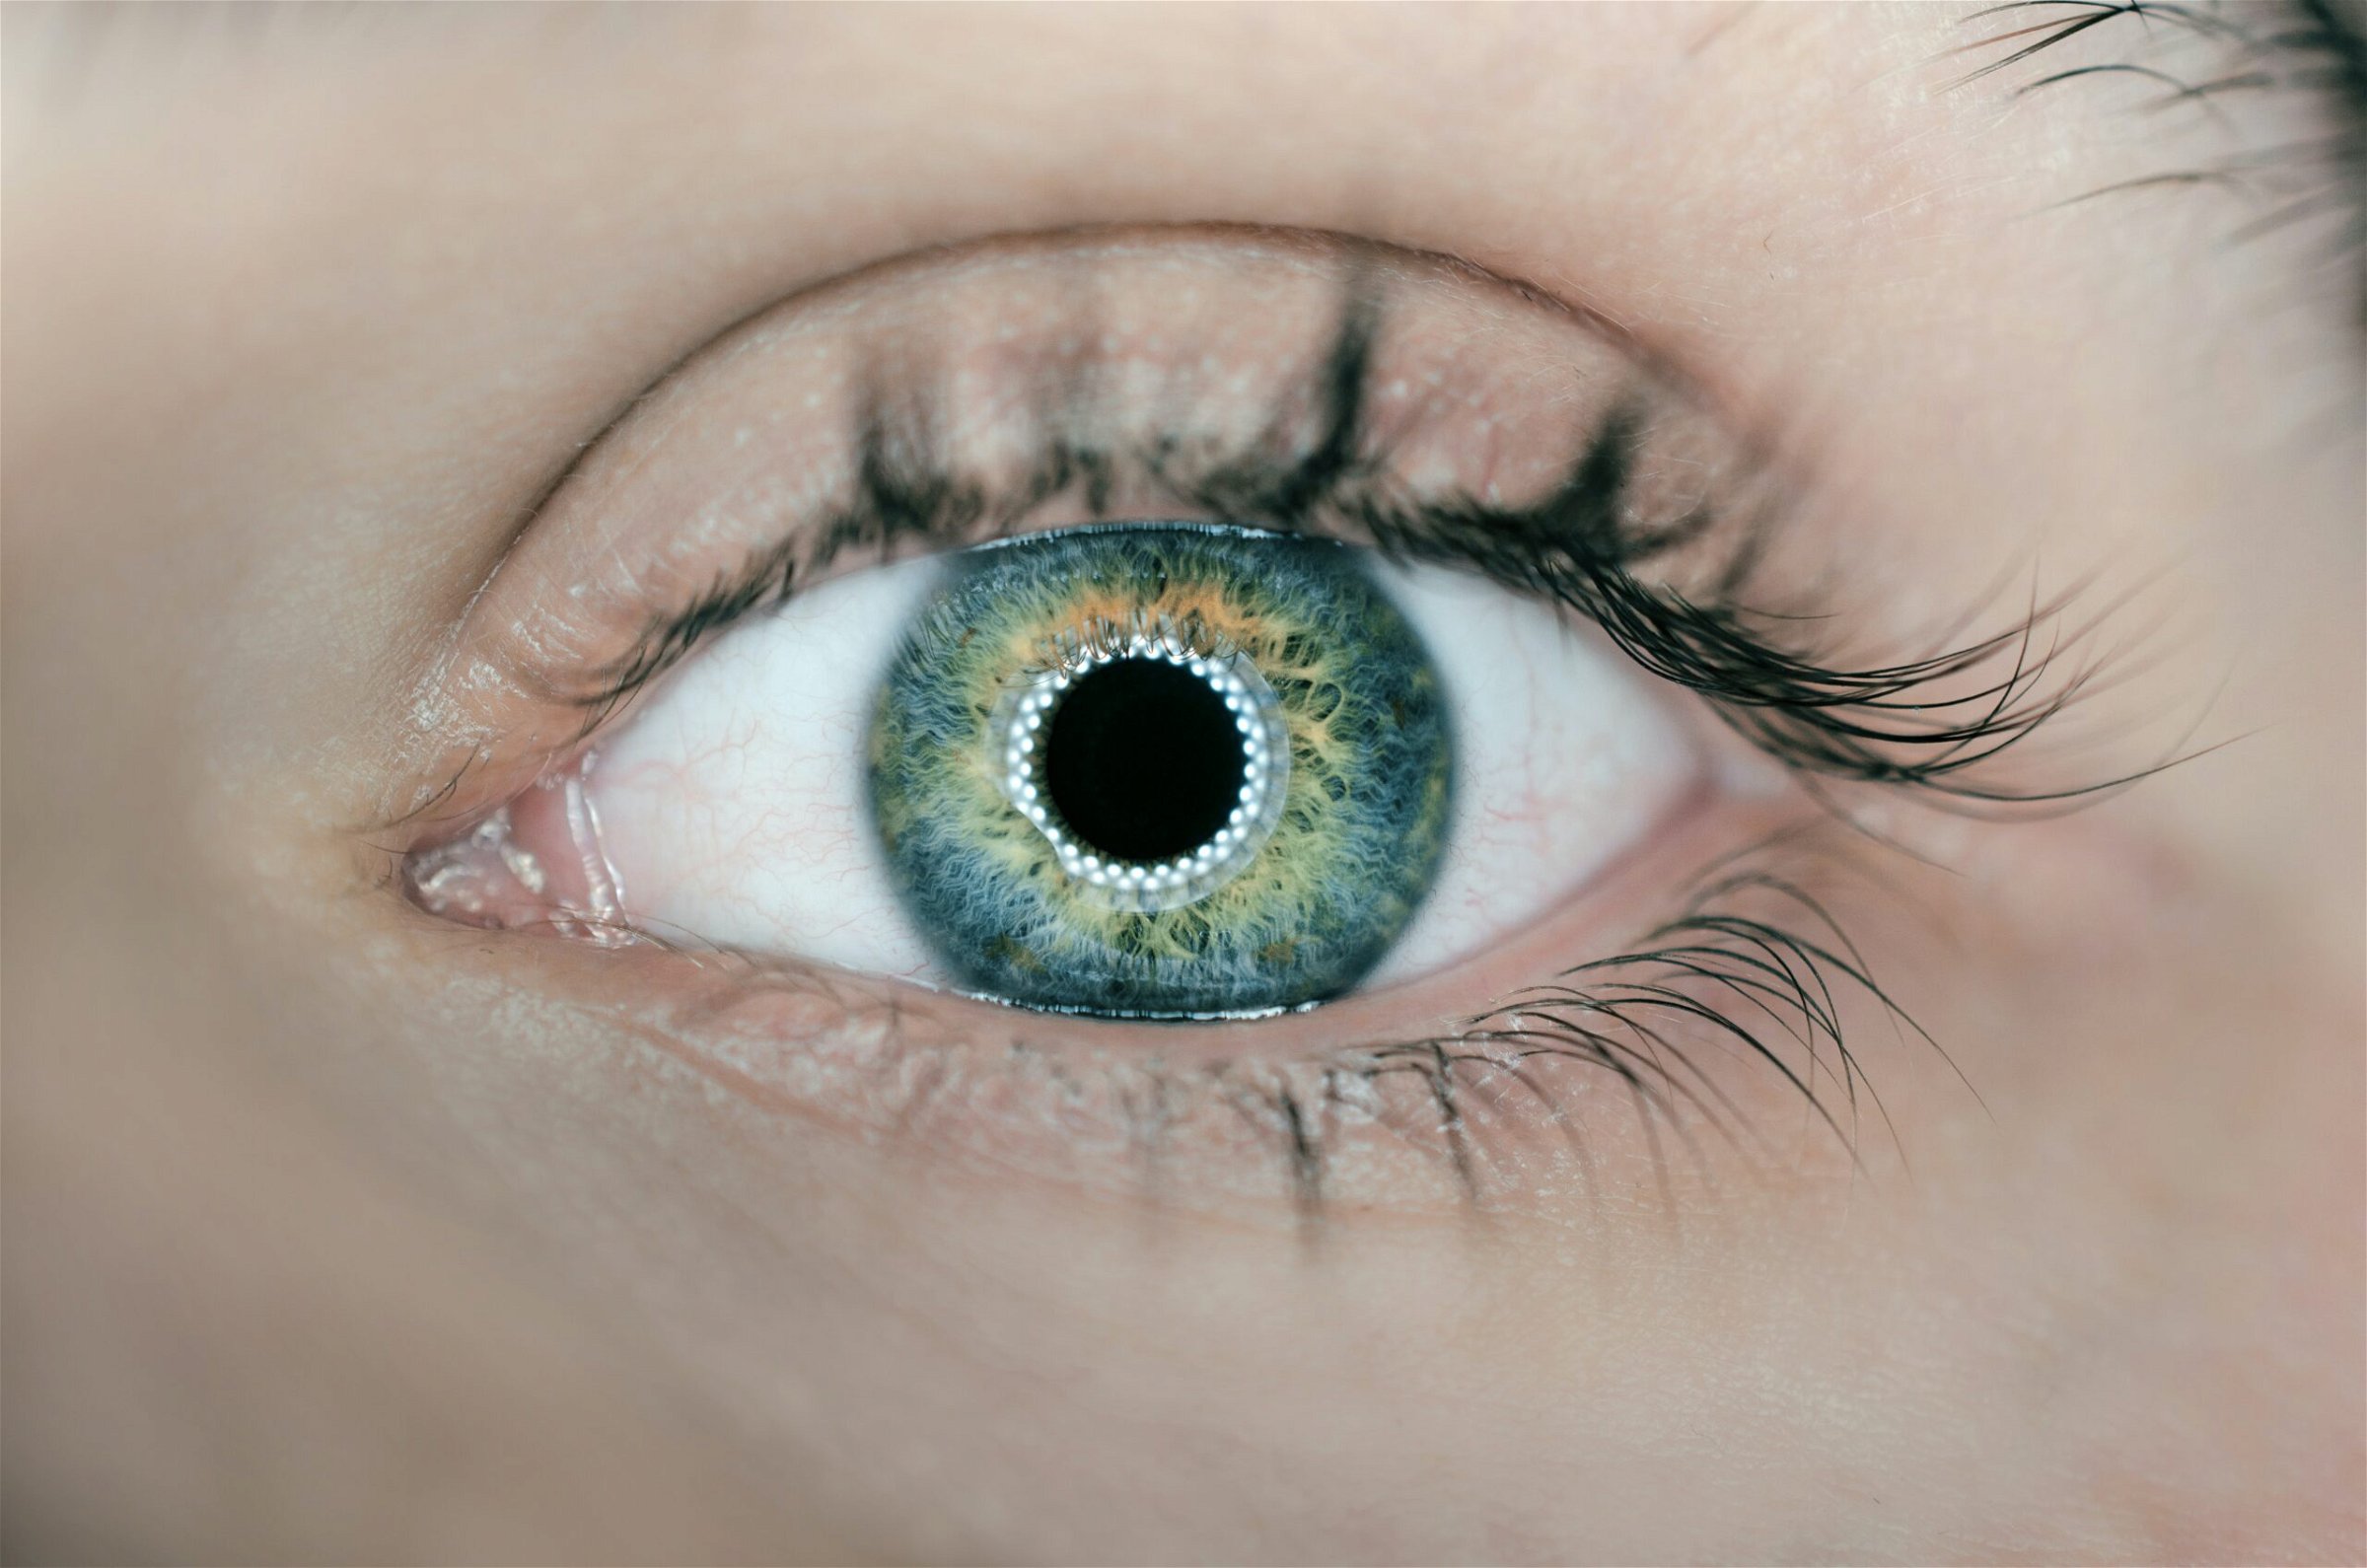 Image of a human eye